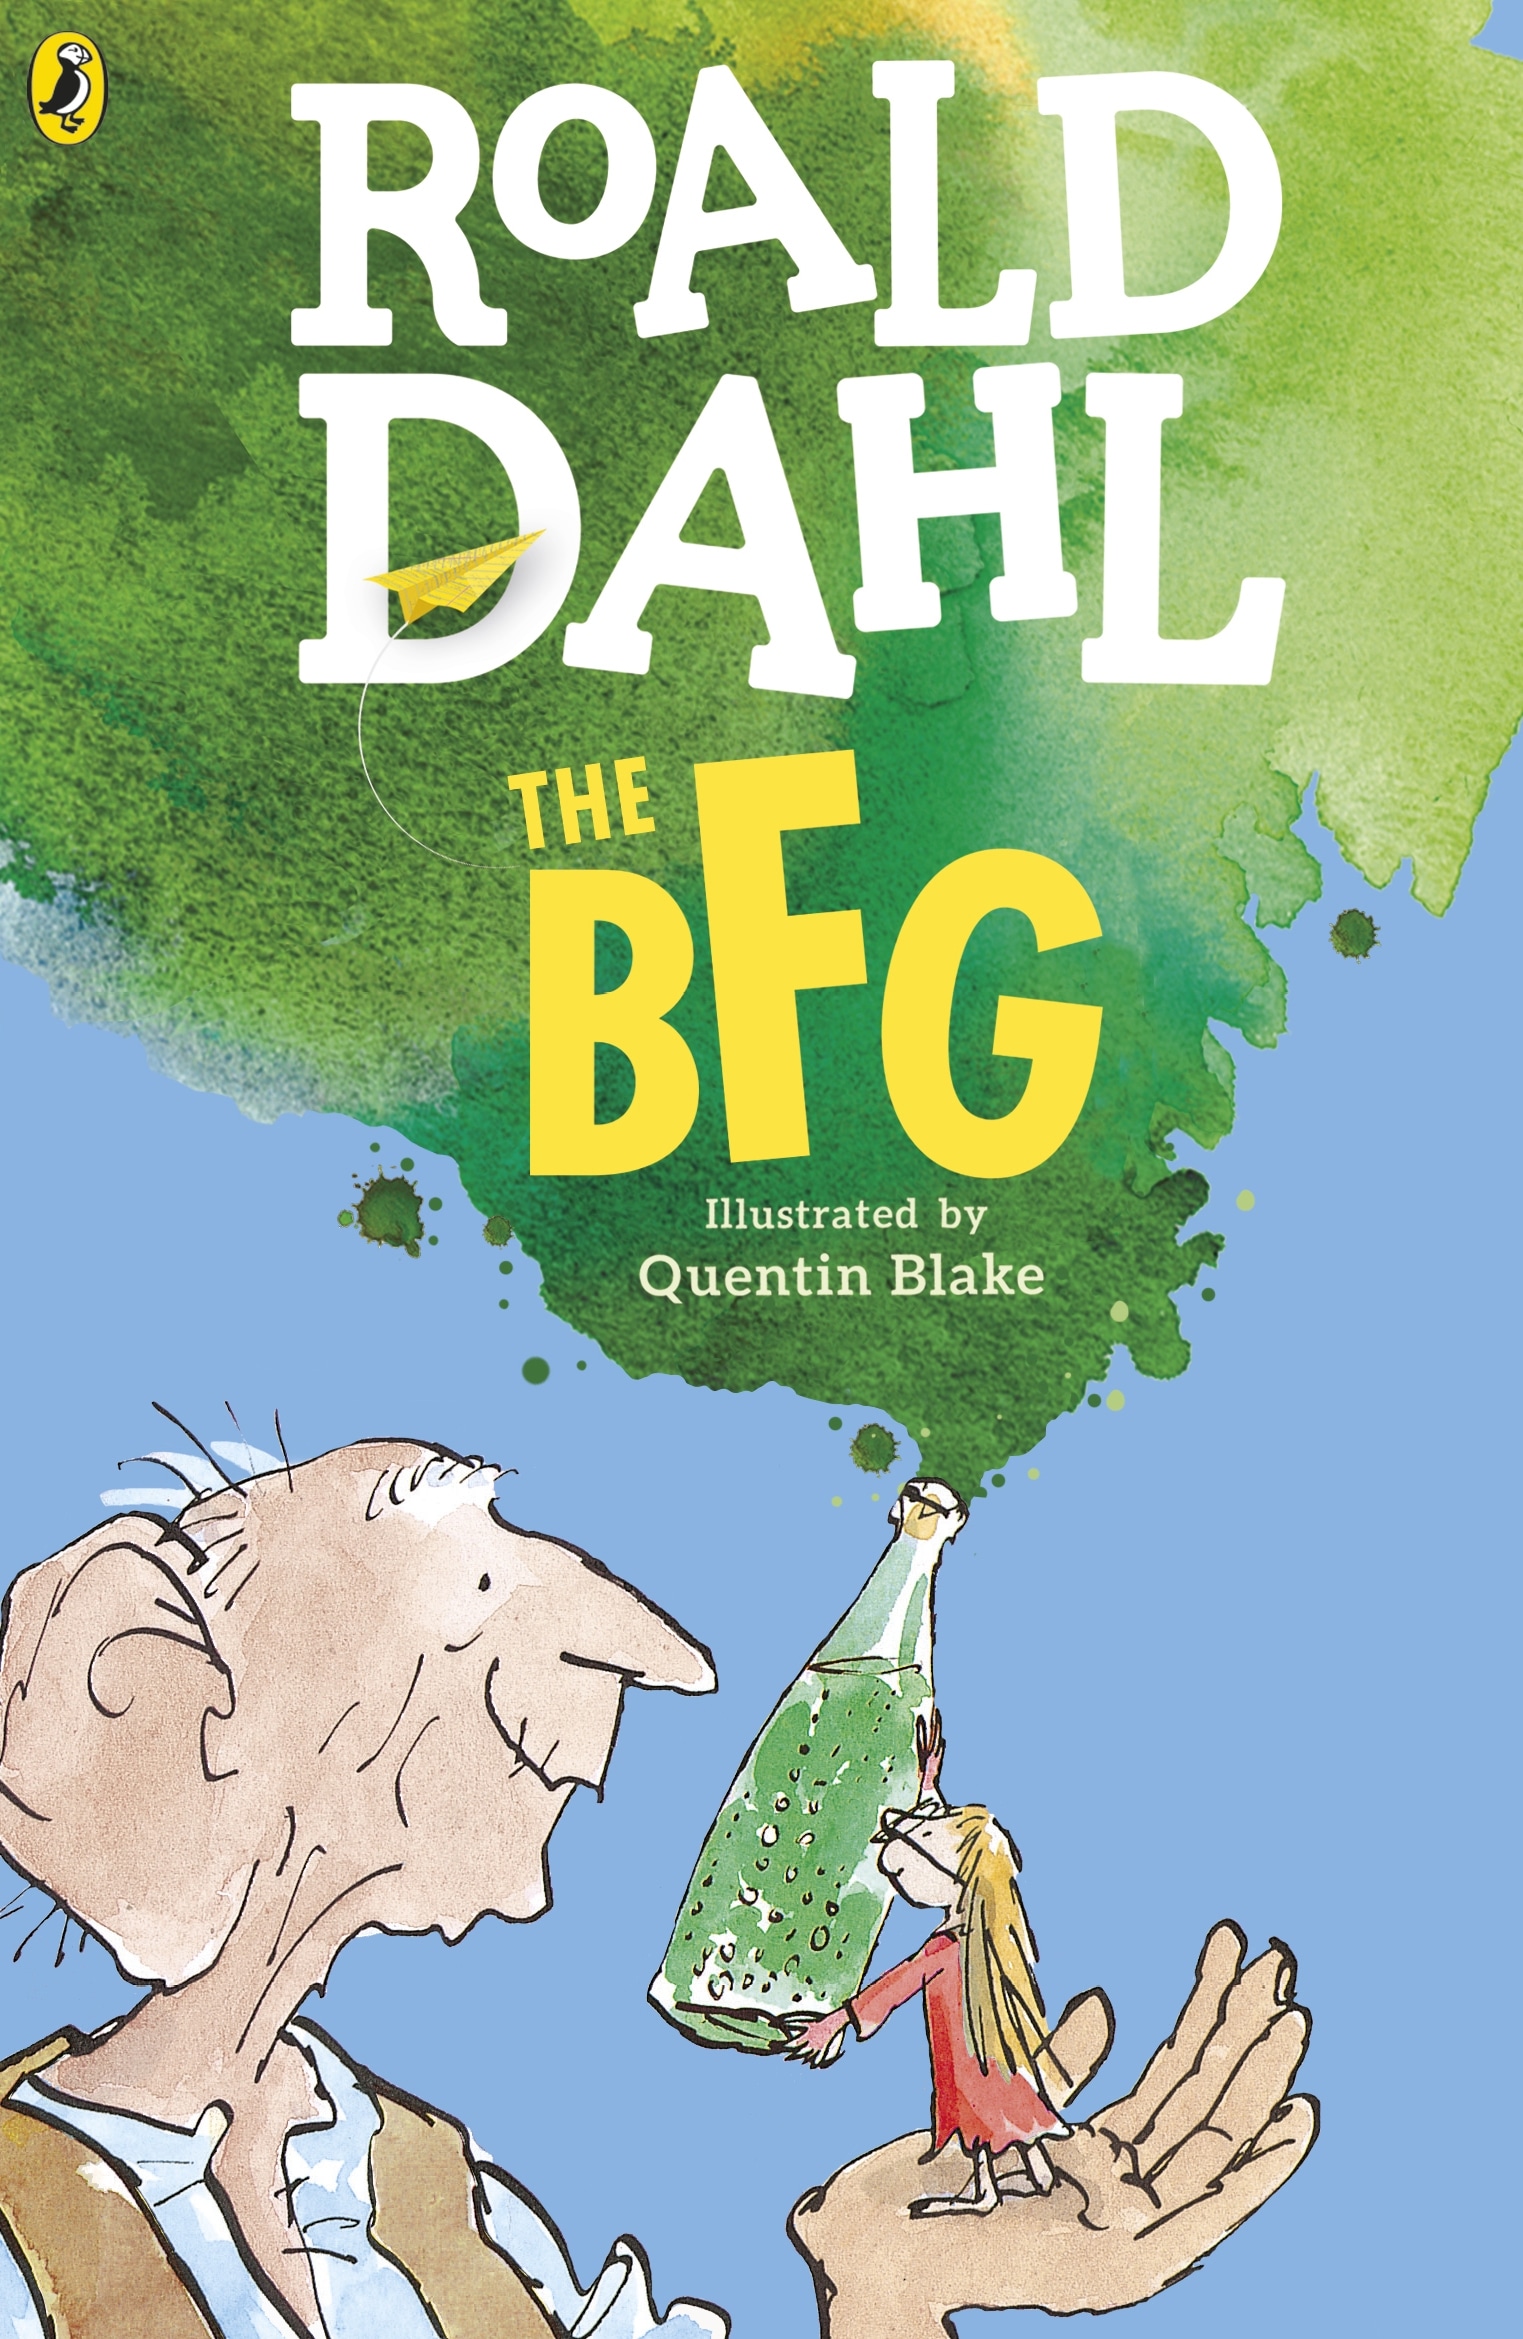 Book “The BFG” by Roald Dahl — February 11, 2016